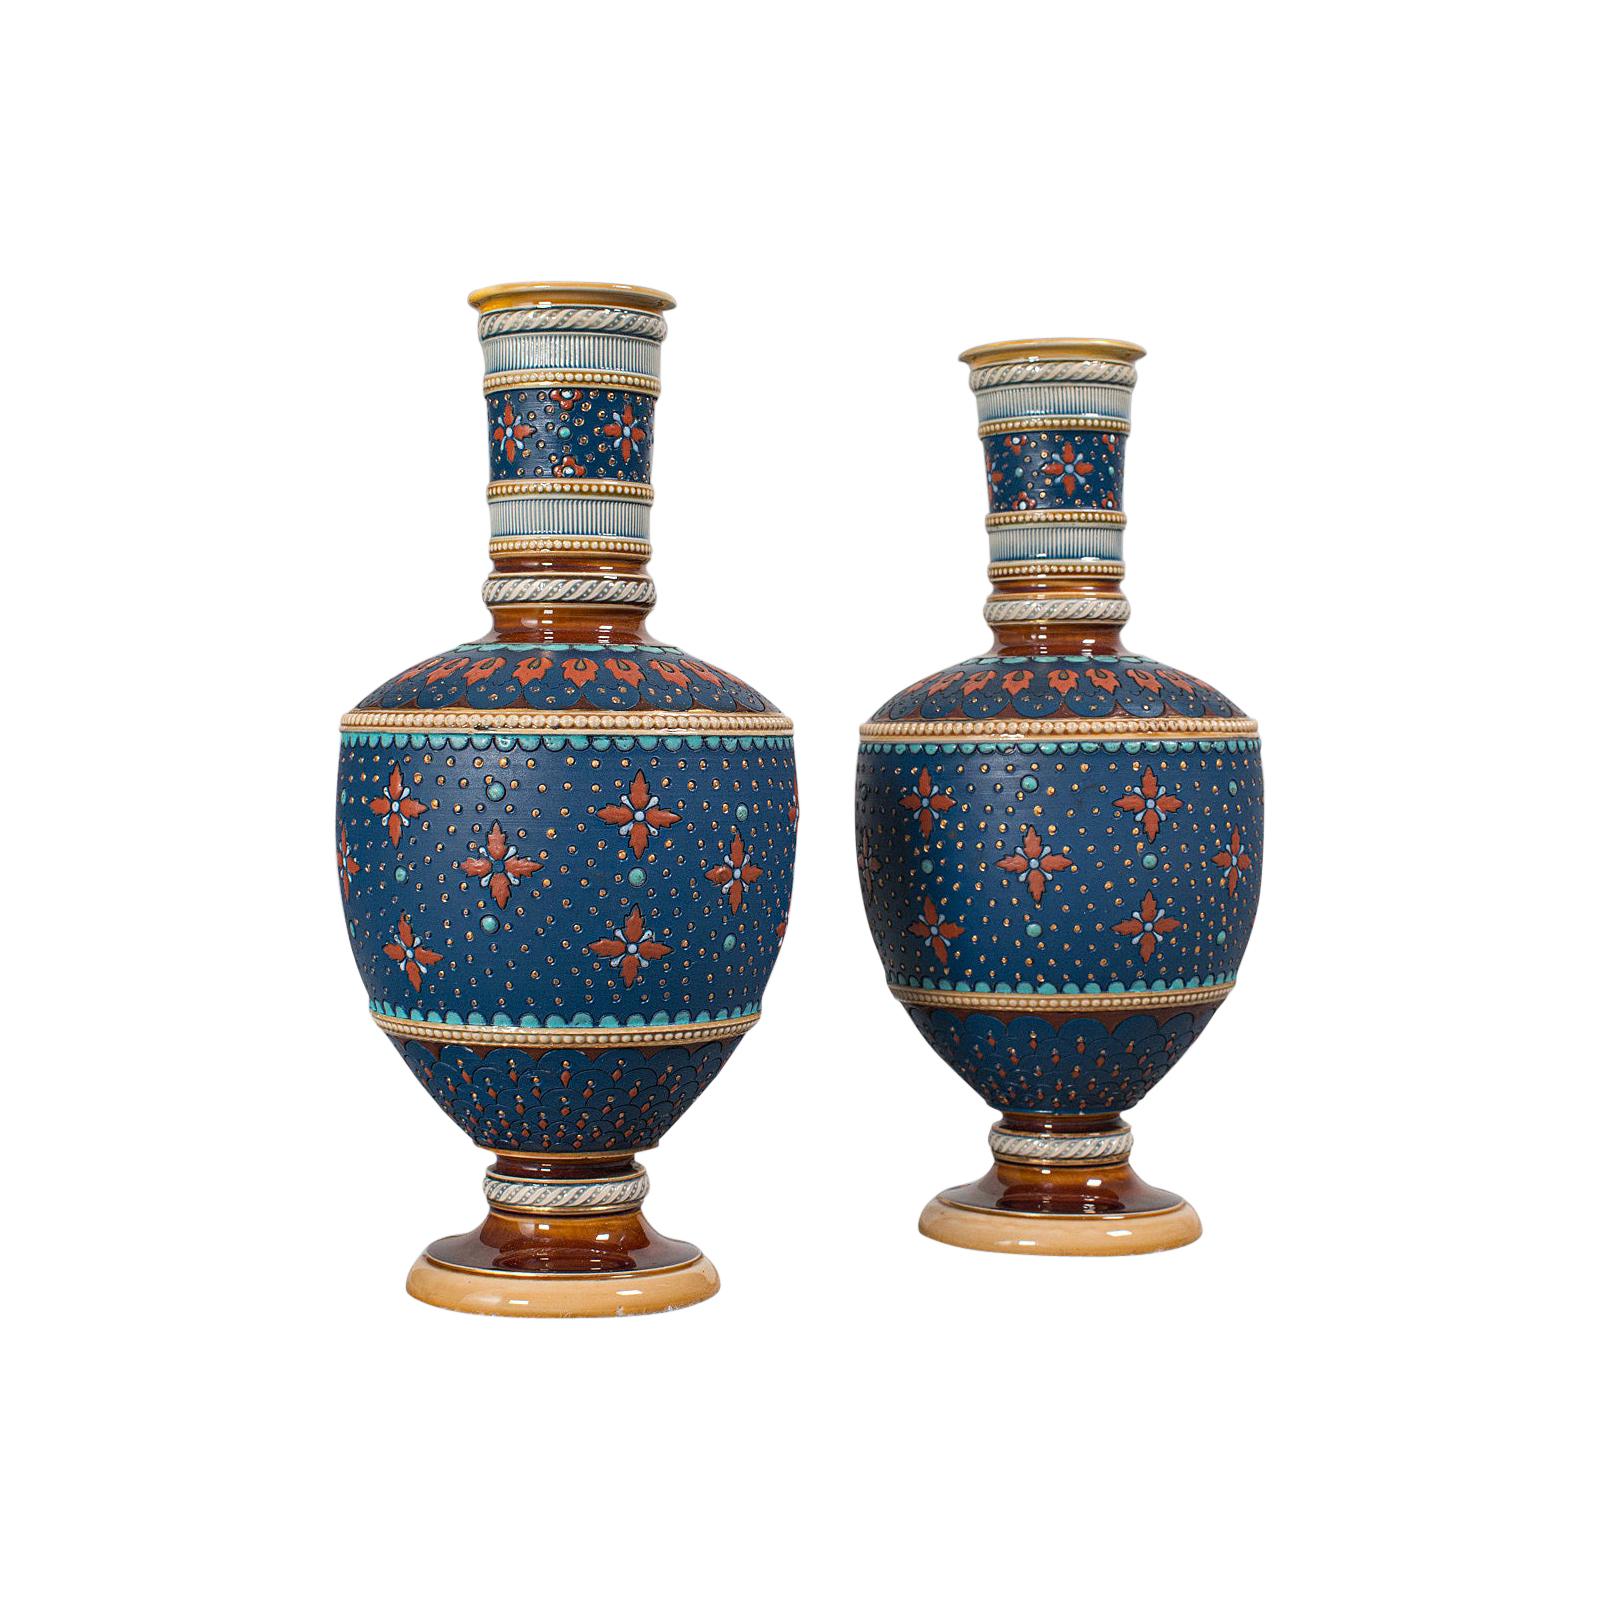 https://a.1stdibscdn.com/pair-of-antique-decorative-vases-german-ceramic-villeroy-boch-victorian-for-sale/1121189/f_226072521613817278079/22607252_master.jpg